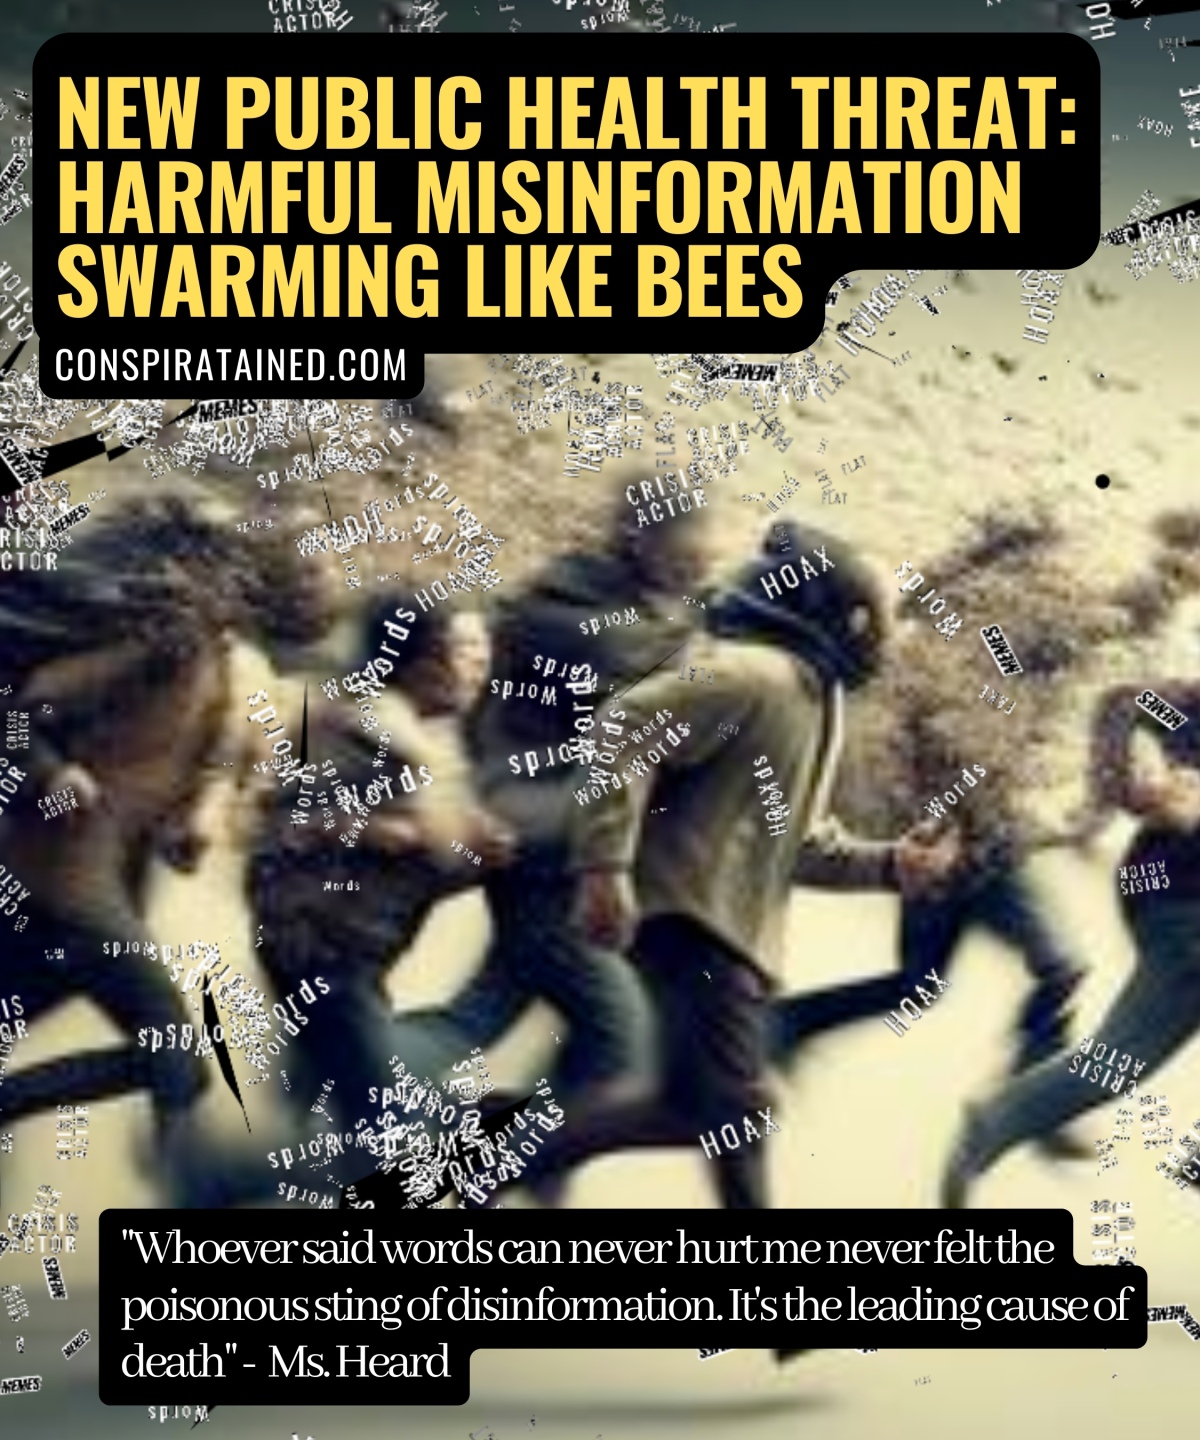 NEW PUBLIC HEALTH THREAT: HARMFUL MISINFORMATION SWARMING LIKE BEES